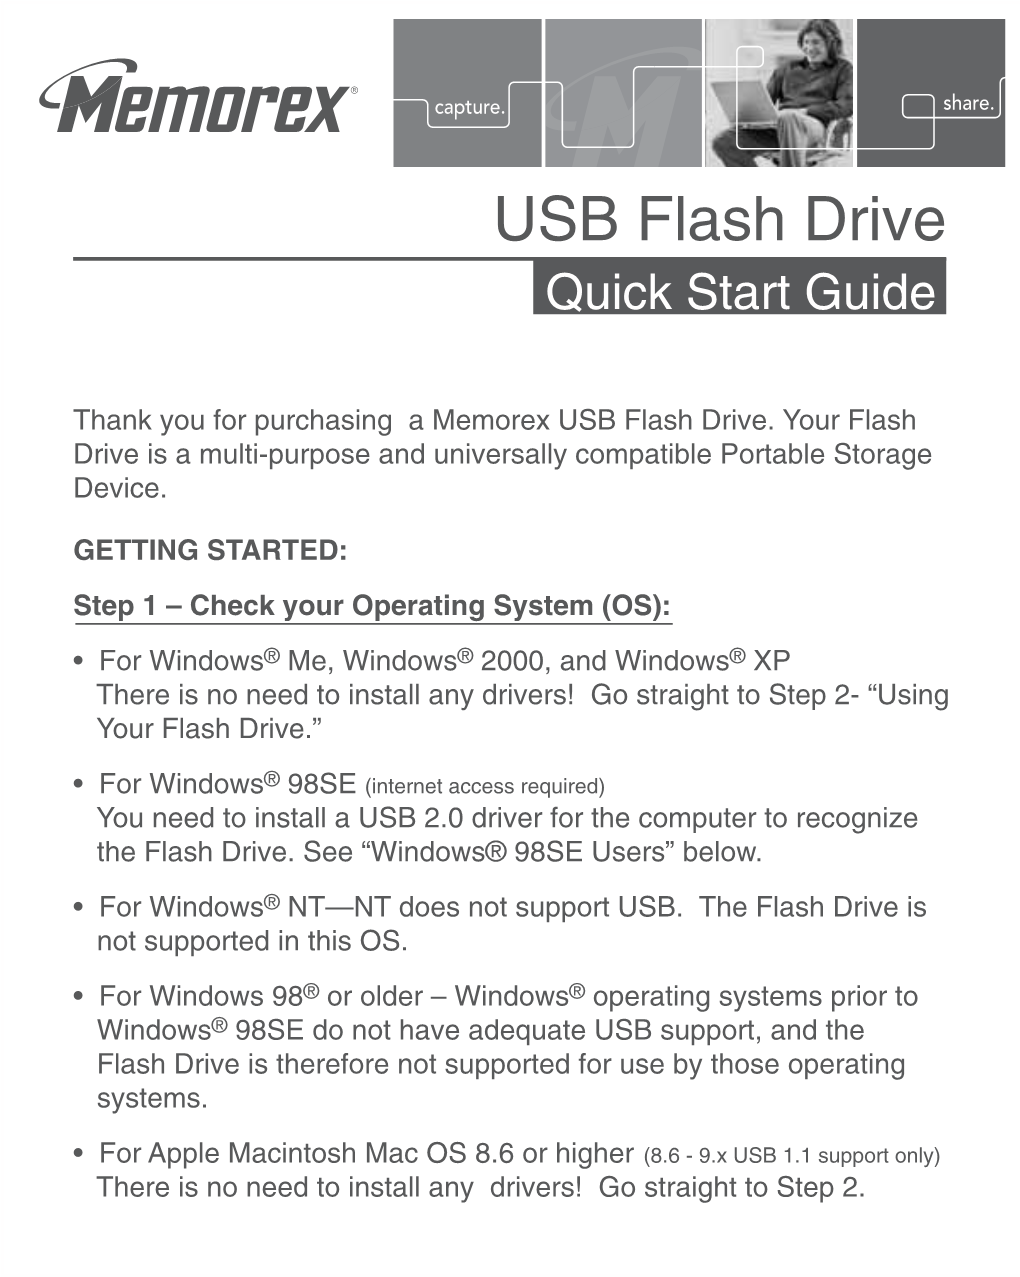 USB Flash Drive Quick Start Guide